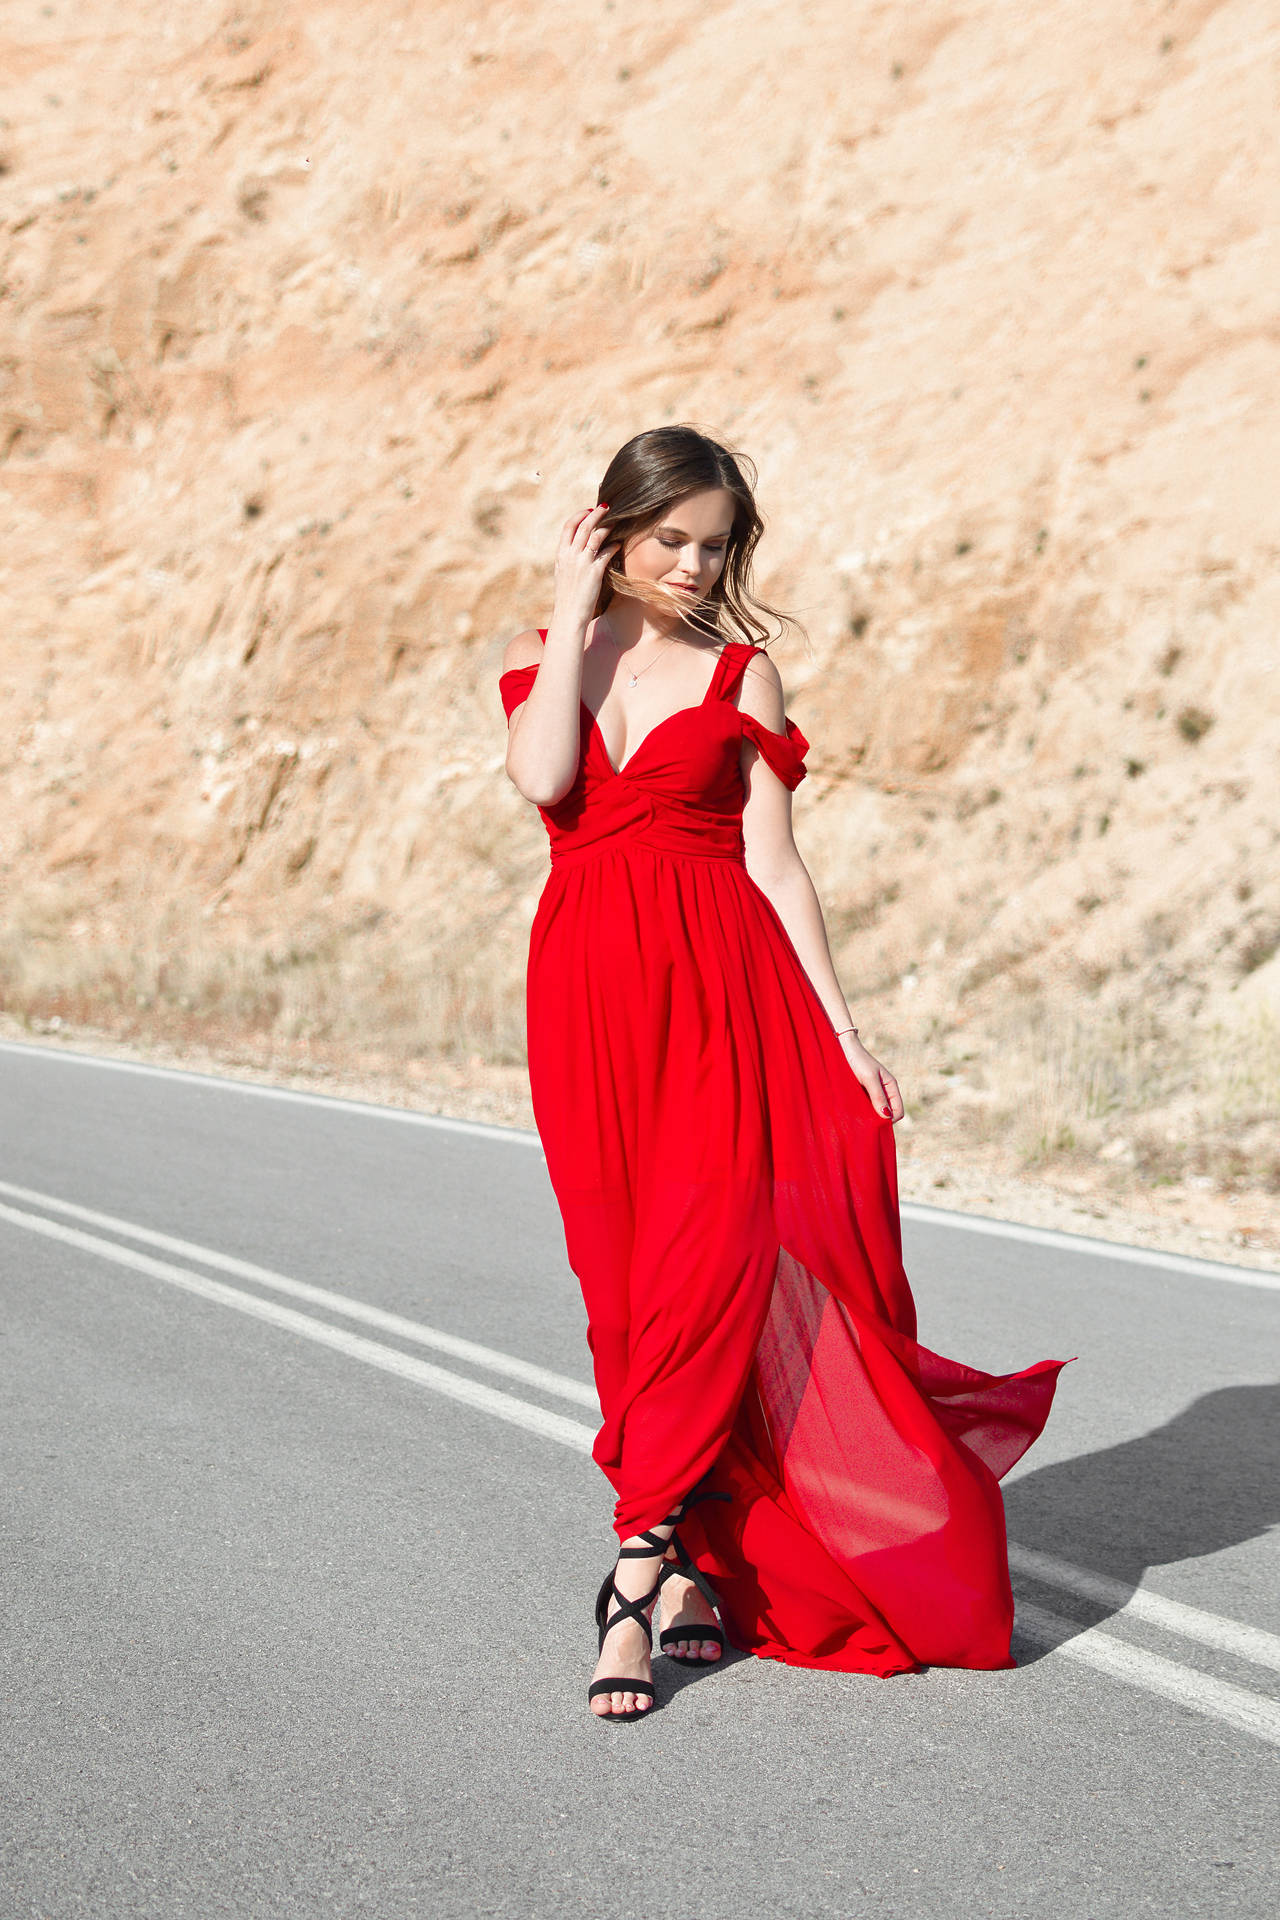 A Very Pretty Red Dress Background